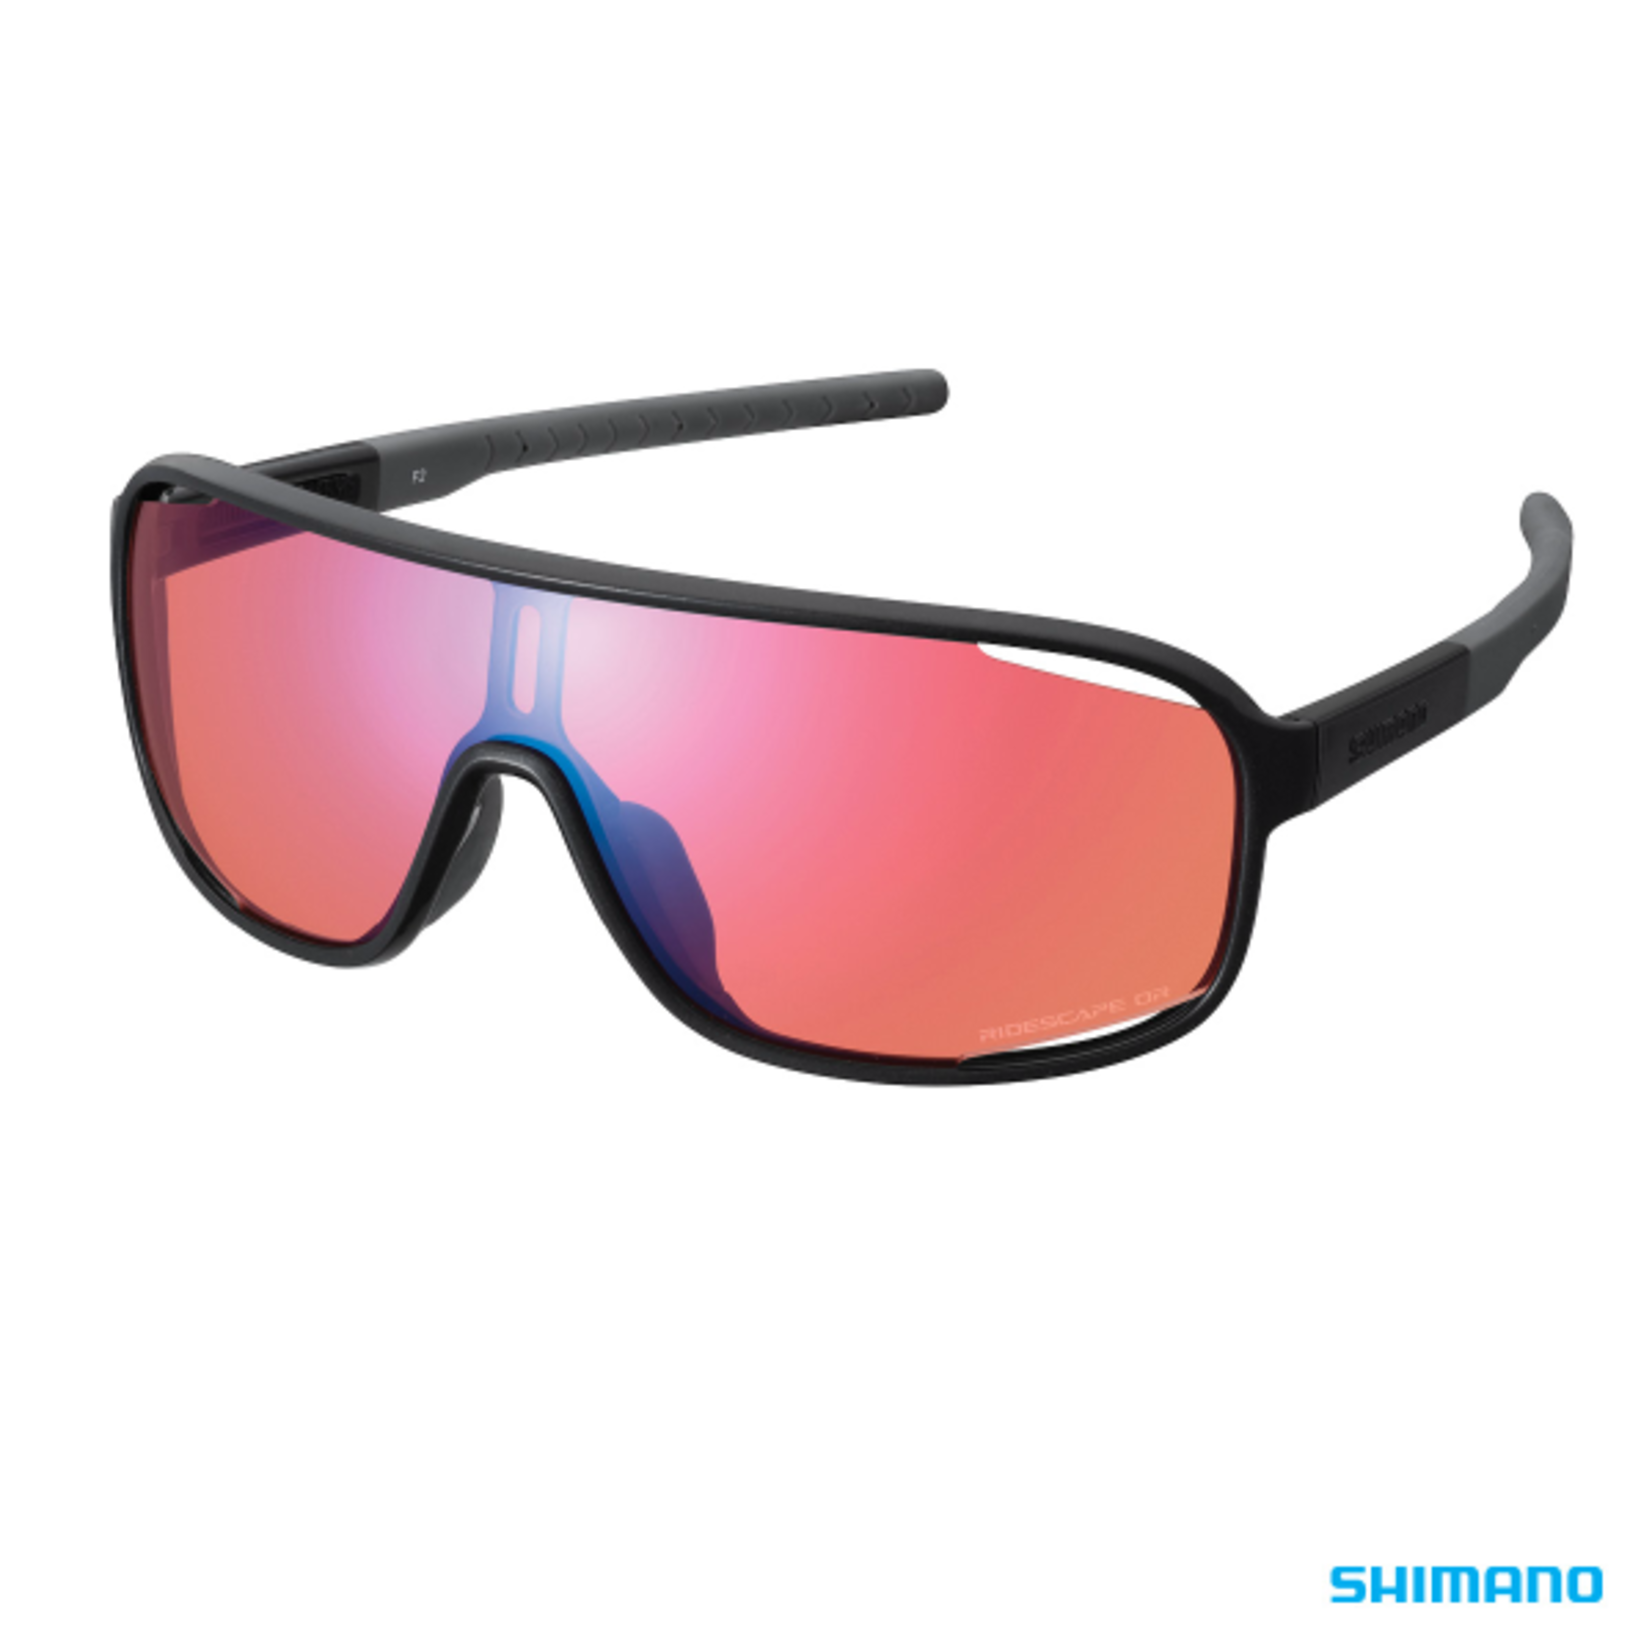 Shimano Shimano Eyewear - CE-Technium - Metallic Black - Ridescape Offroad Sunglasses